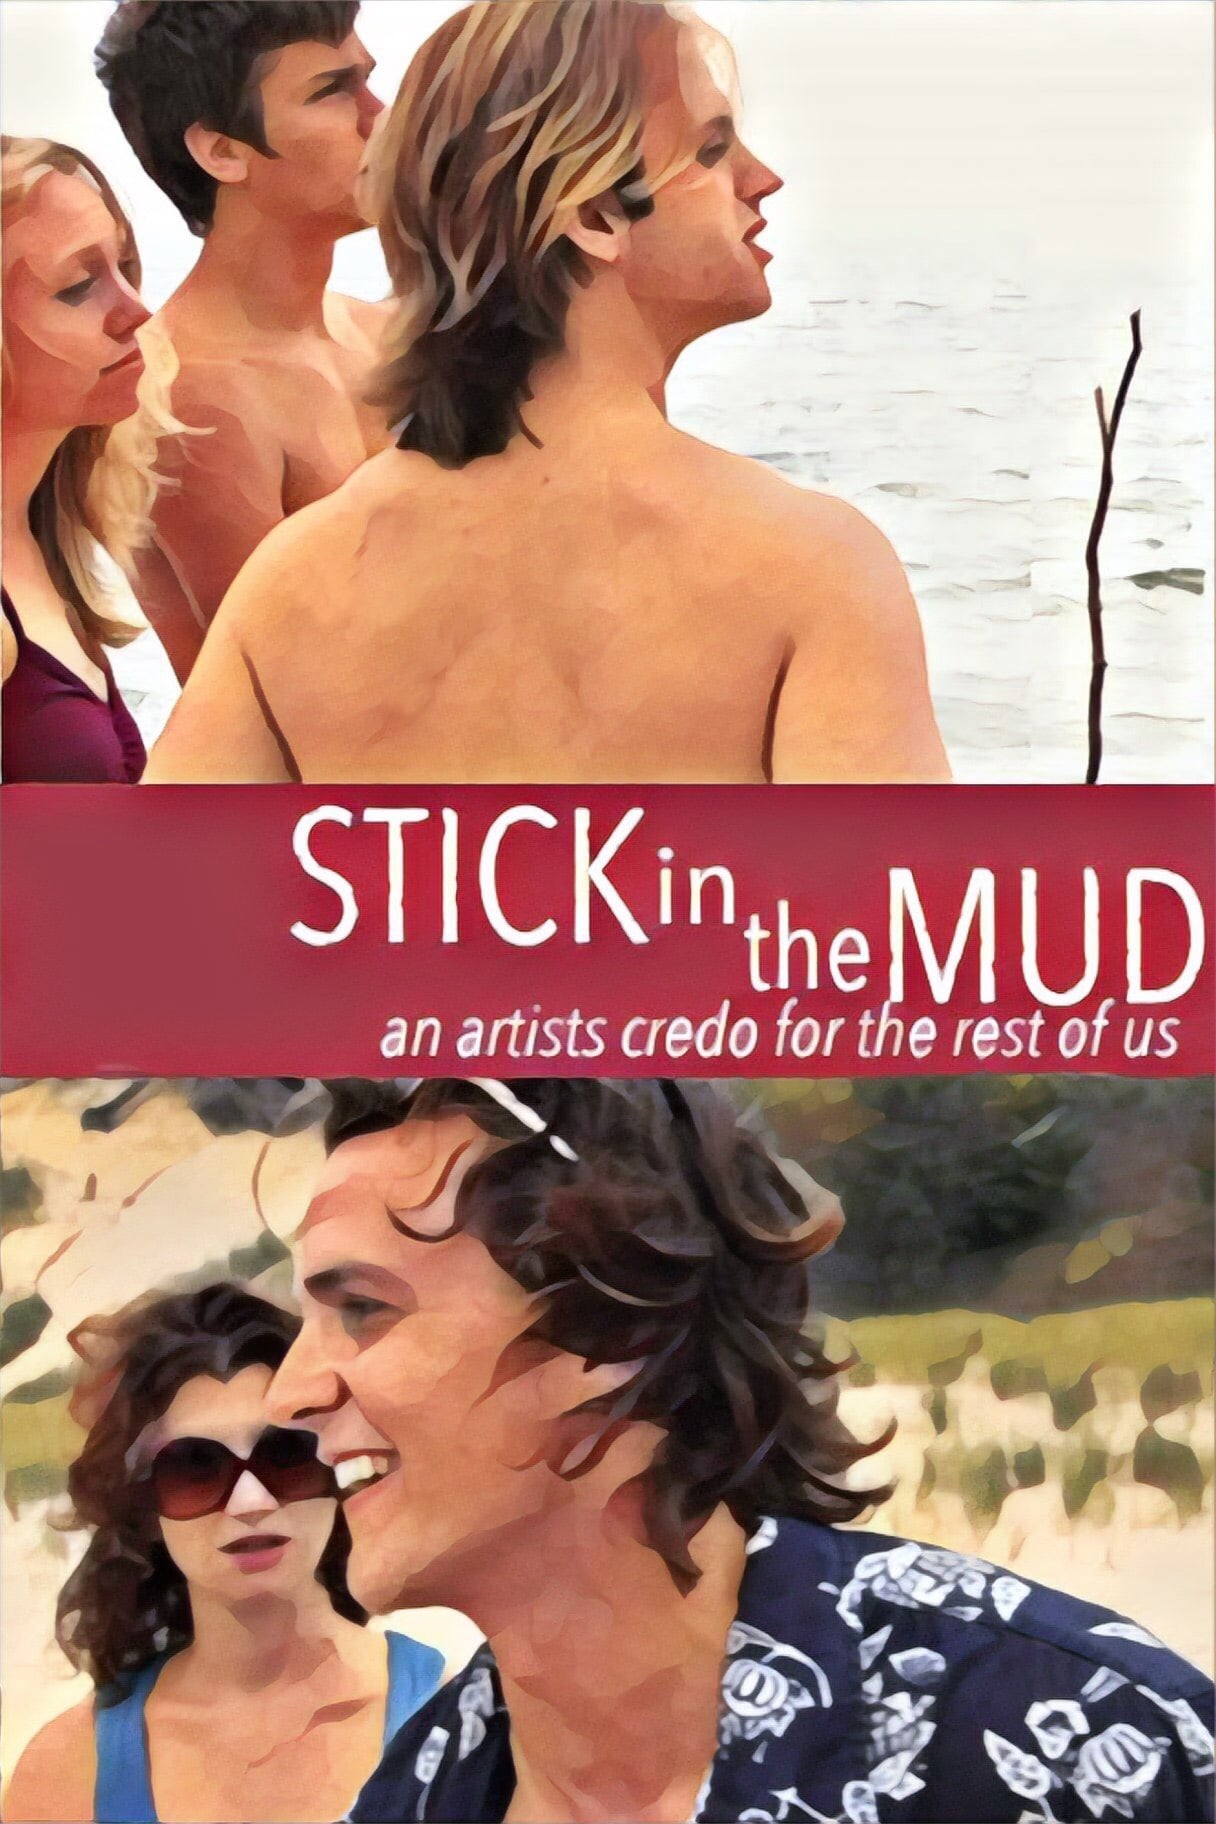 Stick in the Mud